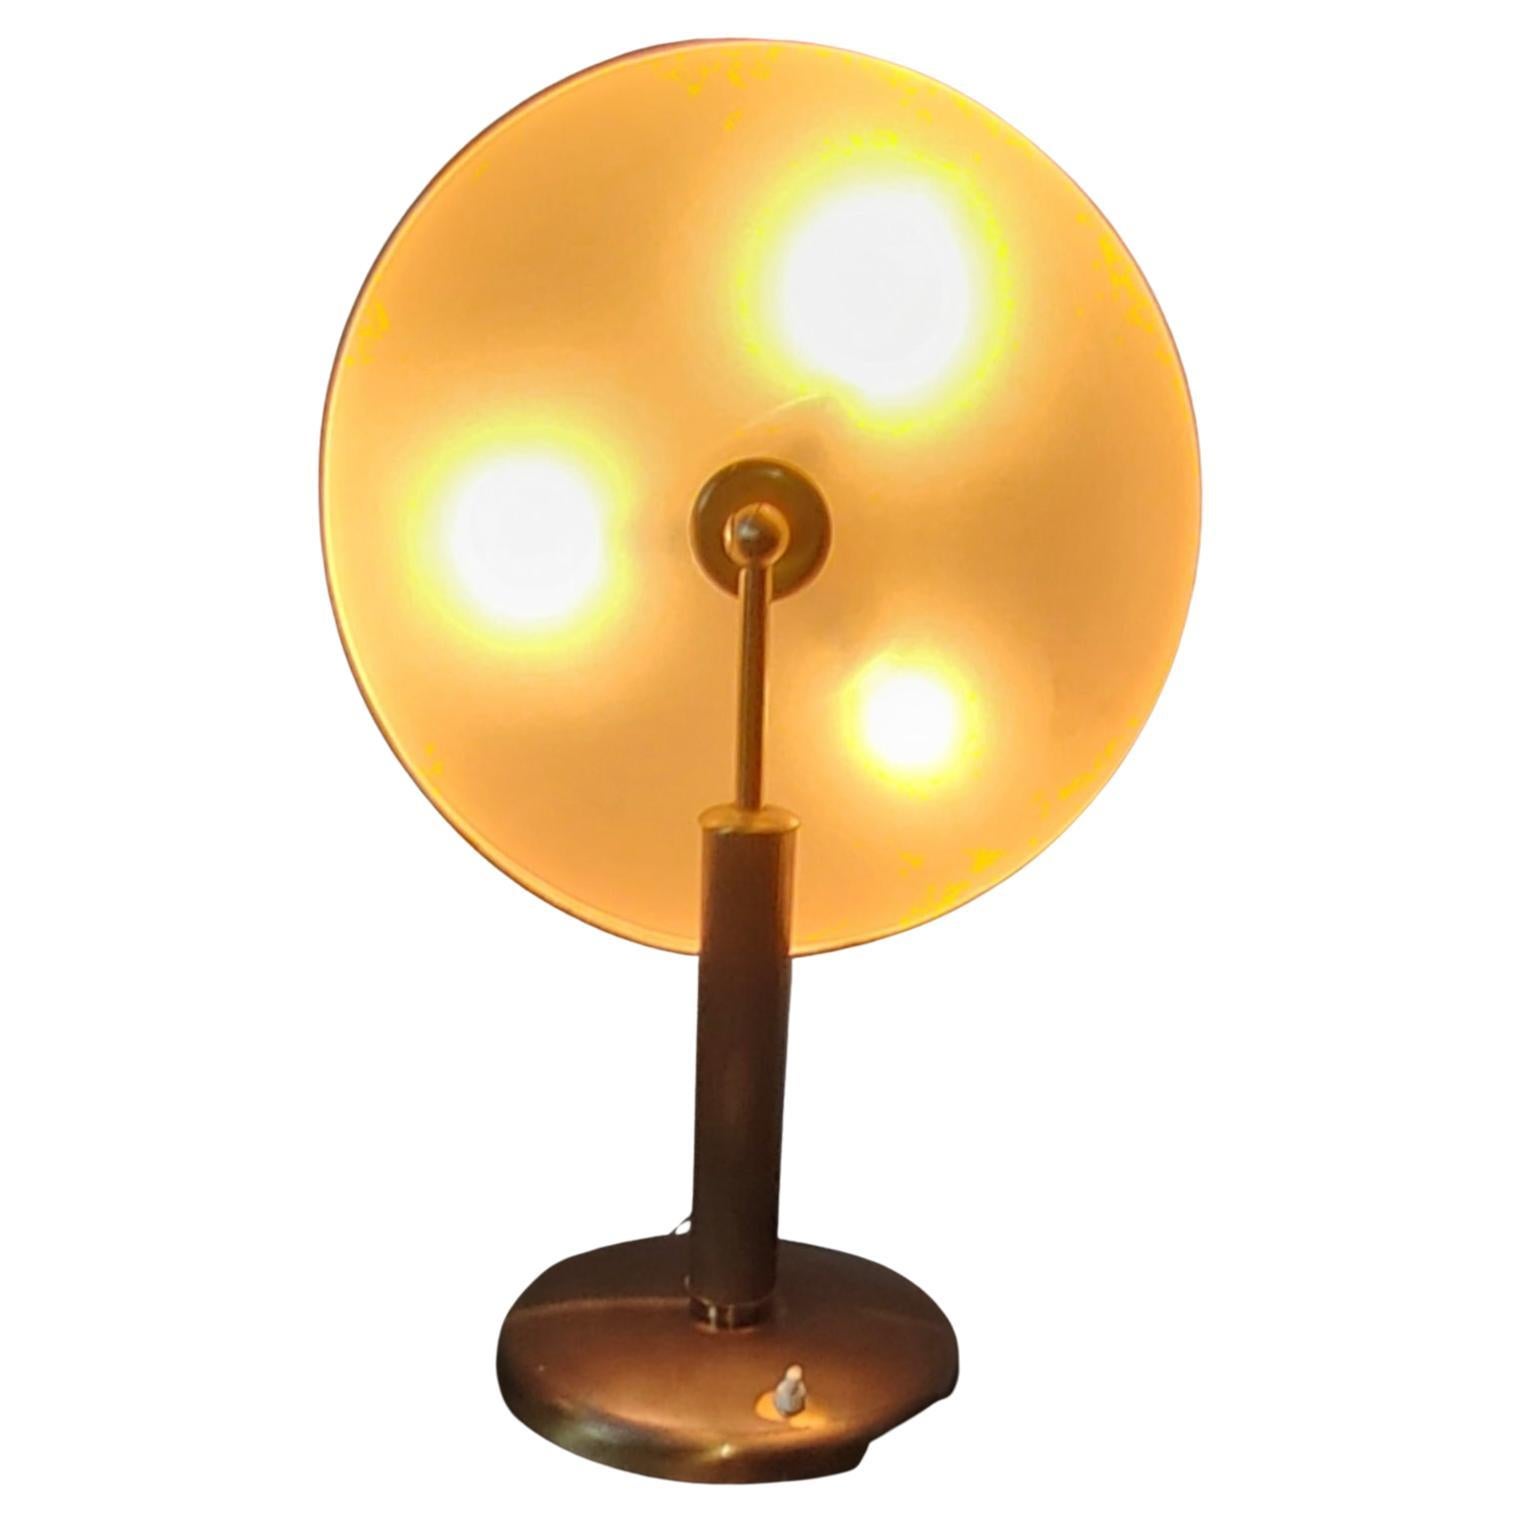 Pietro Chiesa table lamp.